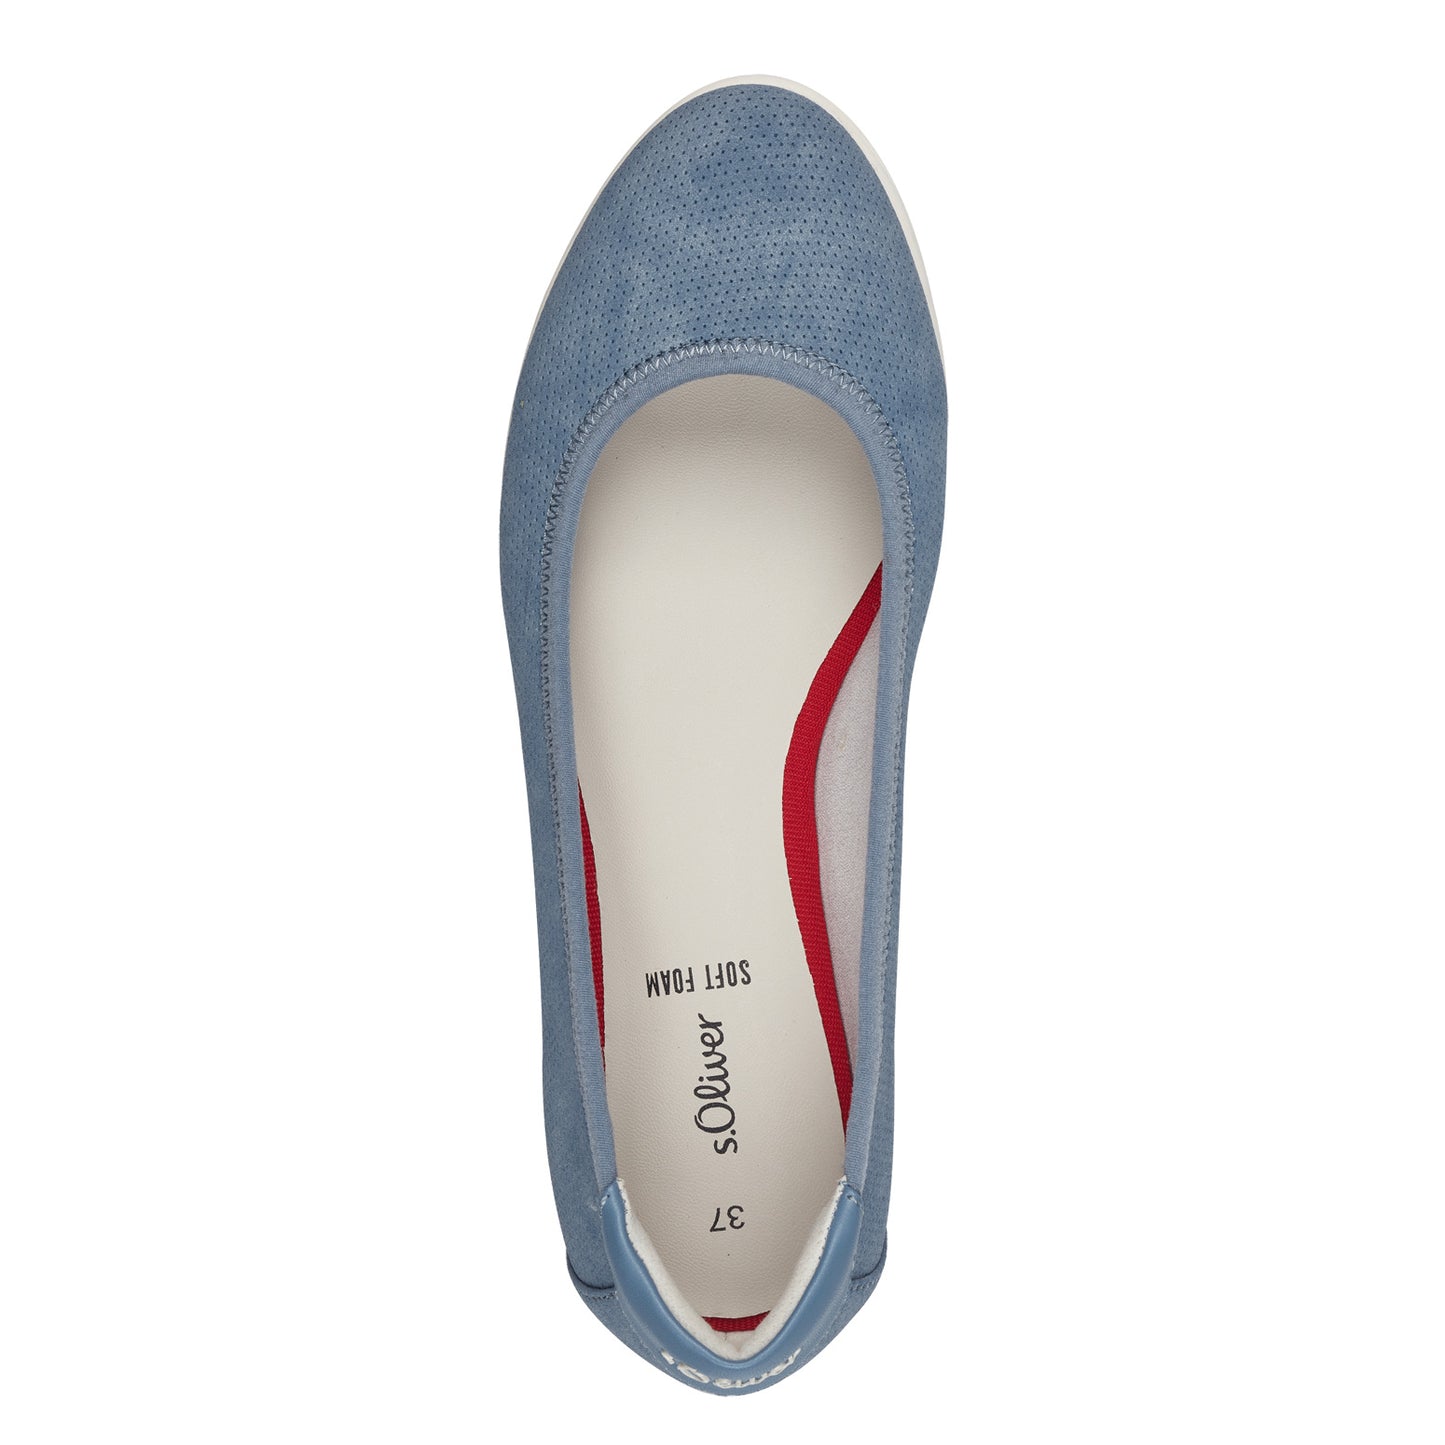 S Oliver 5-22100-42 860 Indigo Ballerina Shoes